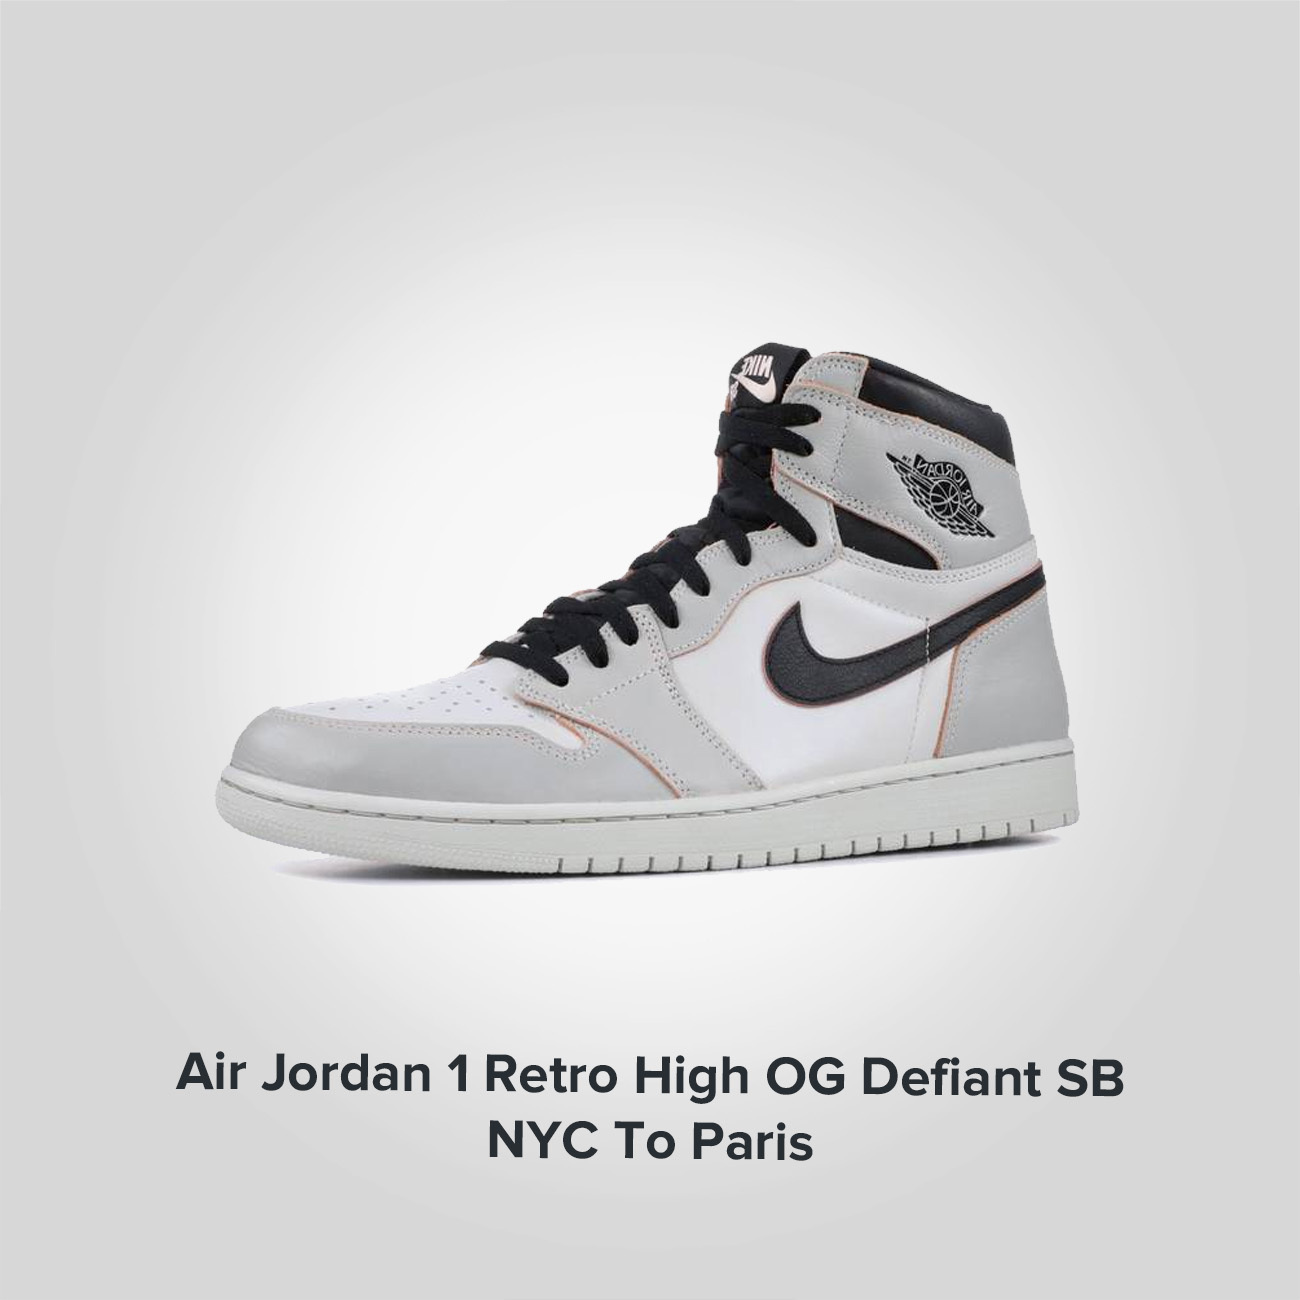 Jordan 1 Retro High OG Defiant SB NYC to Paris